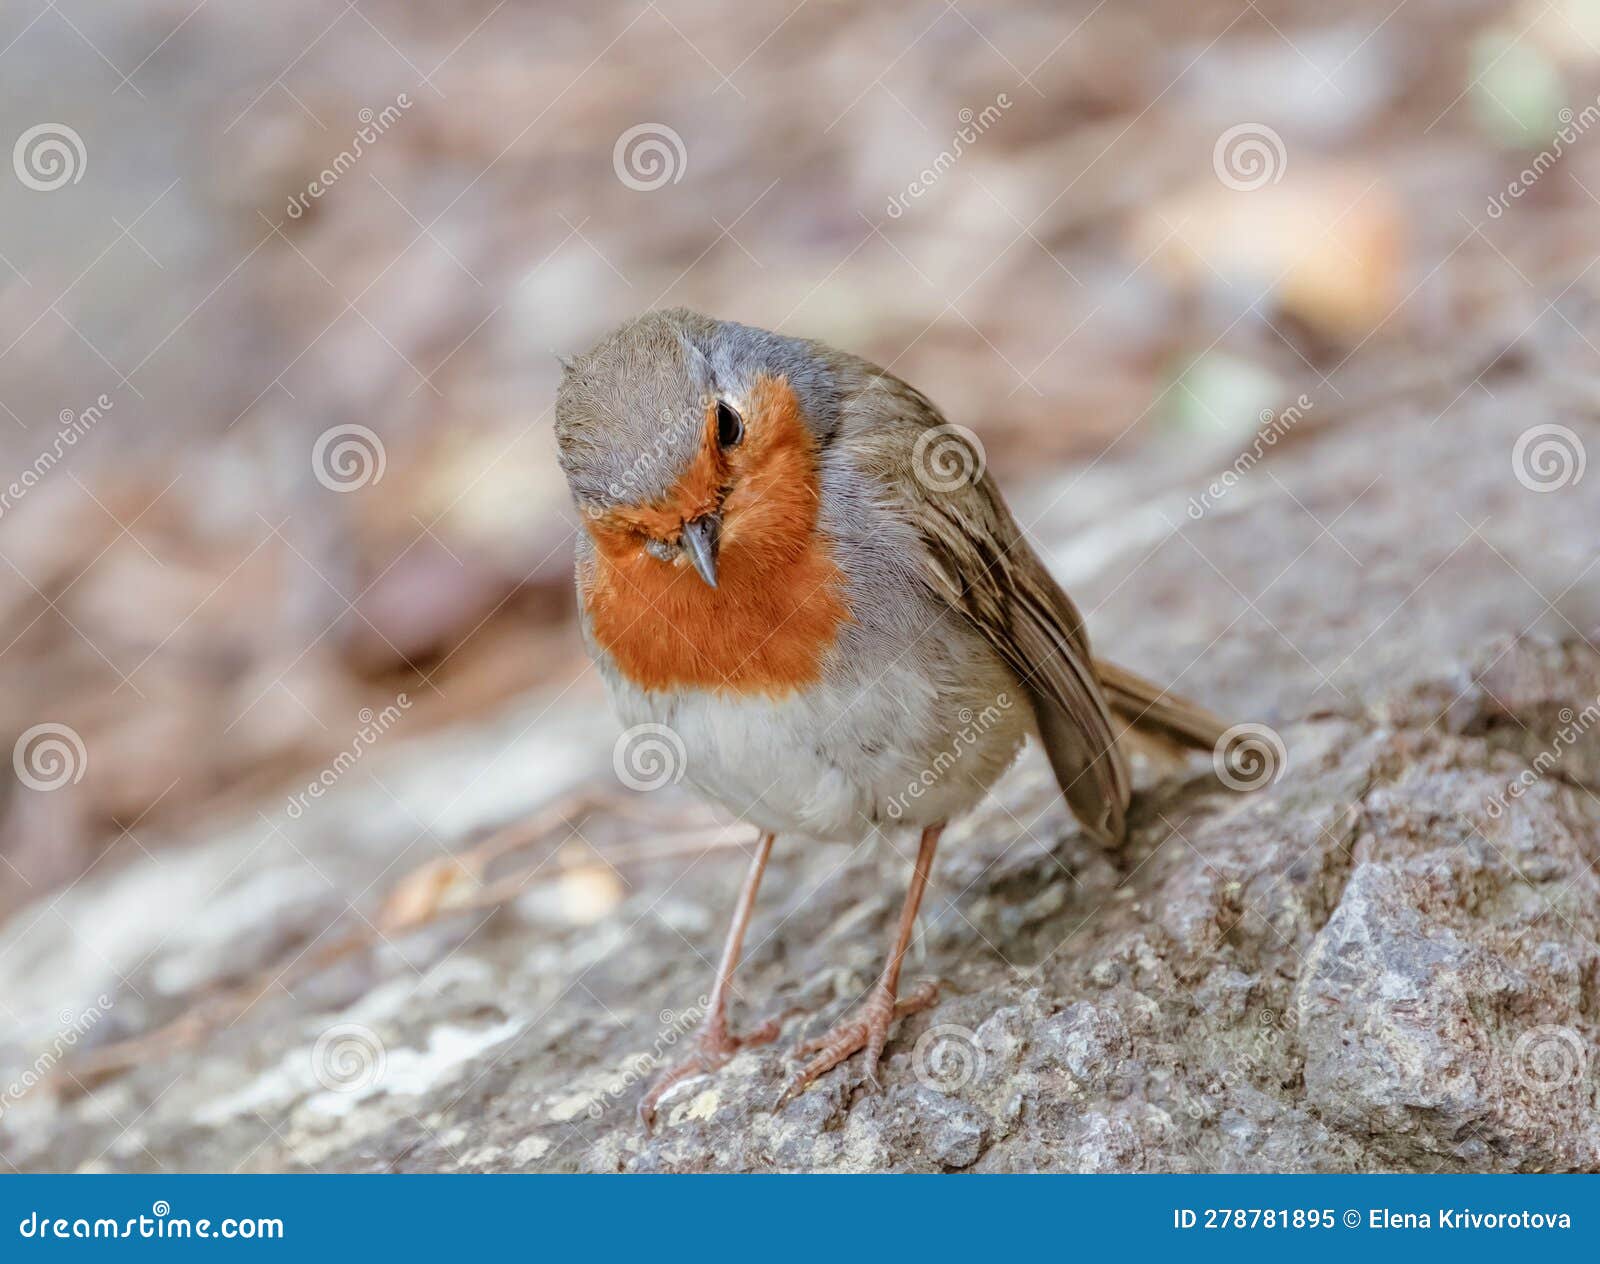 robin bird or erithacus rubecula, standing on cliff in the cactualdea park in gran canaria, spain